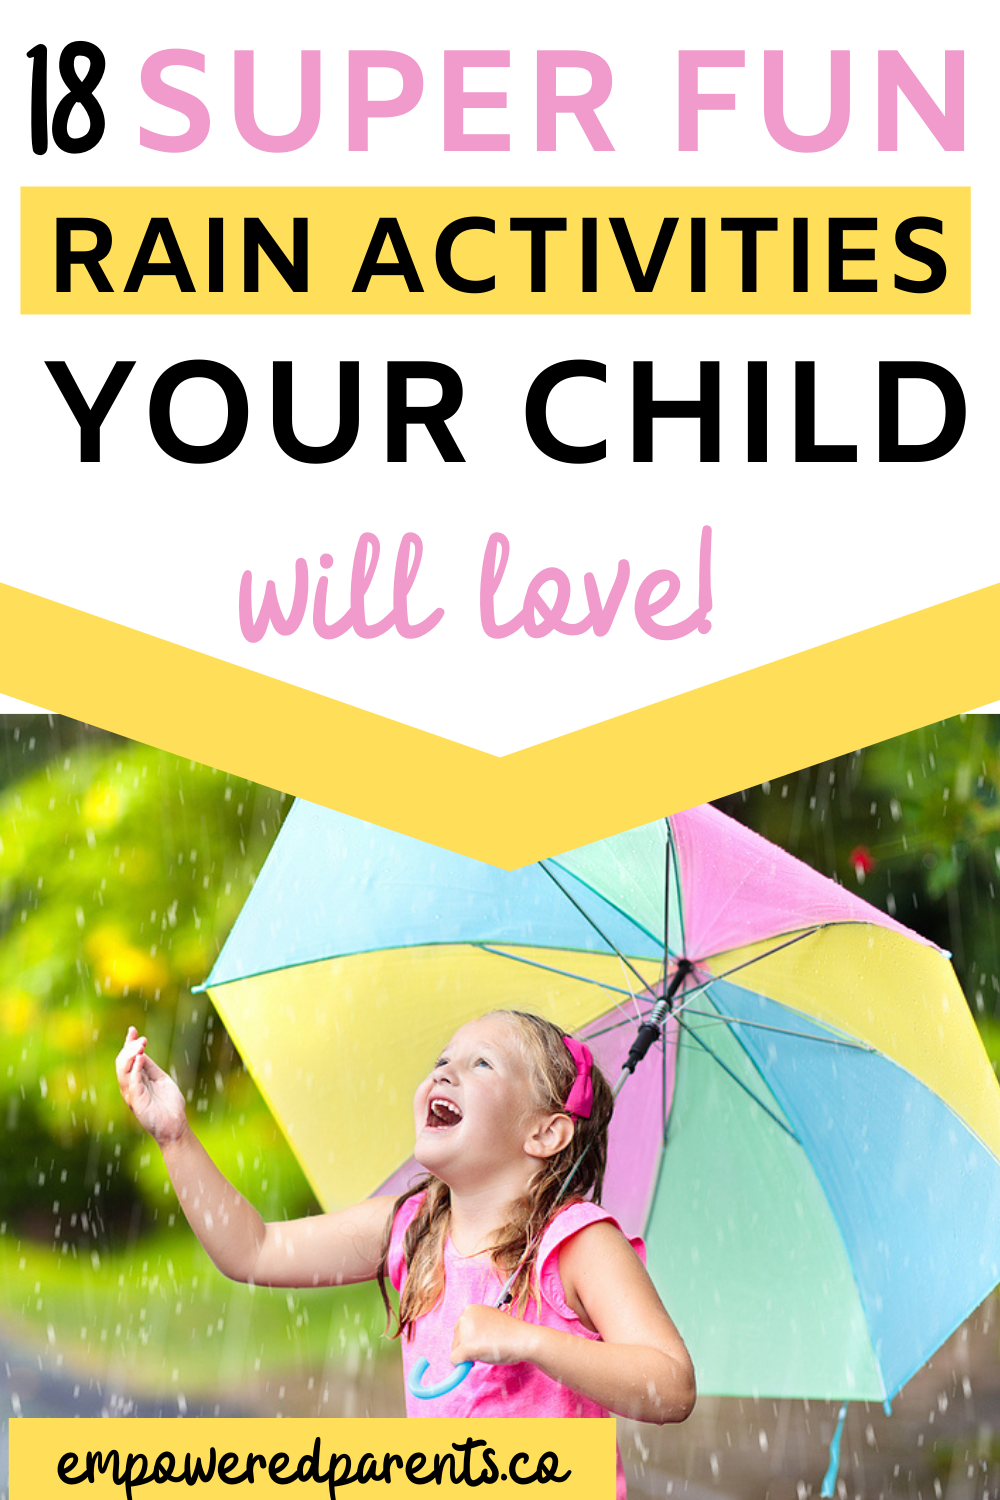 18 super fun rain activities pniterest image